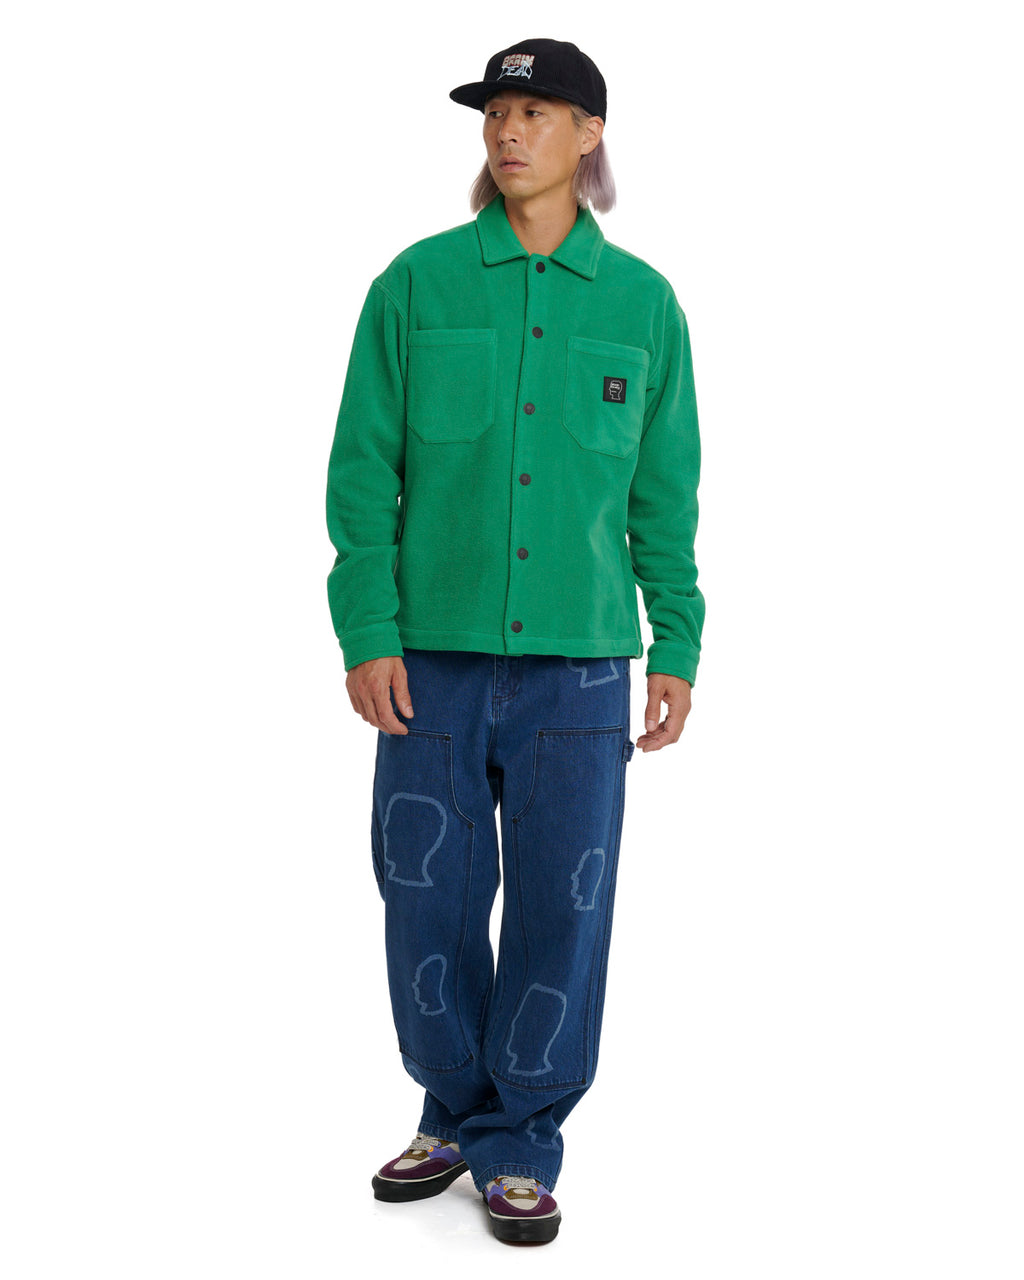 Polar Fleece Climber Shirt - Green 4